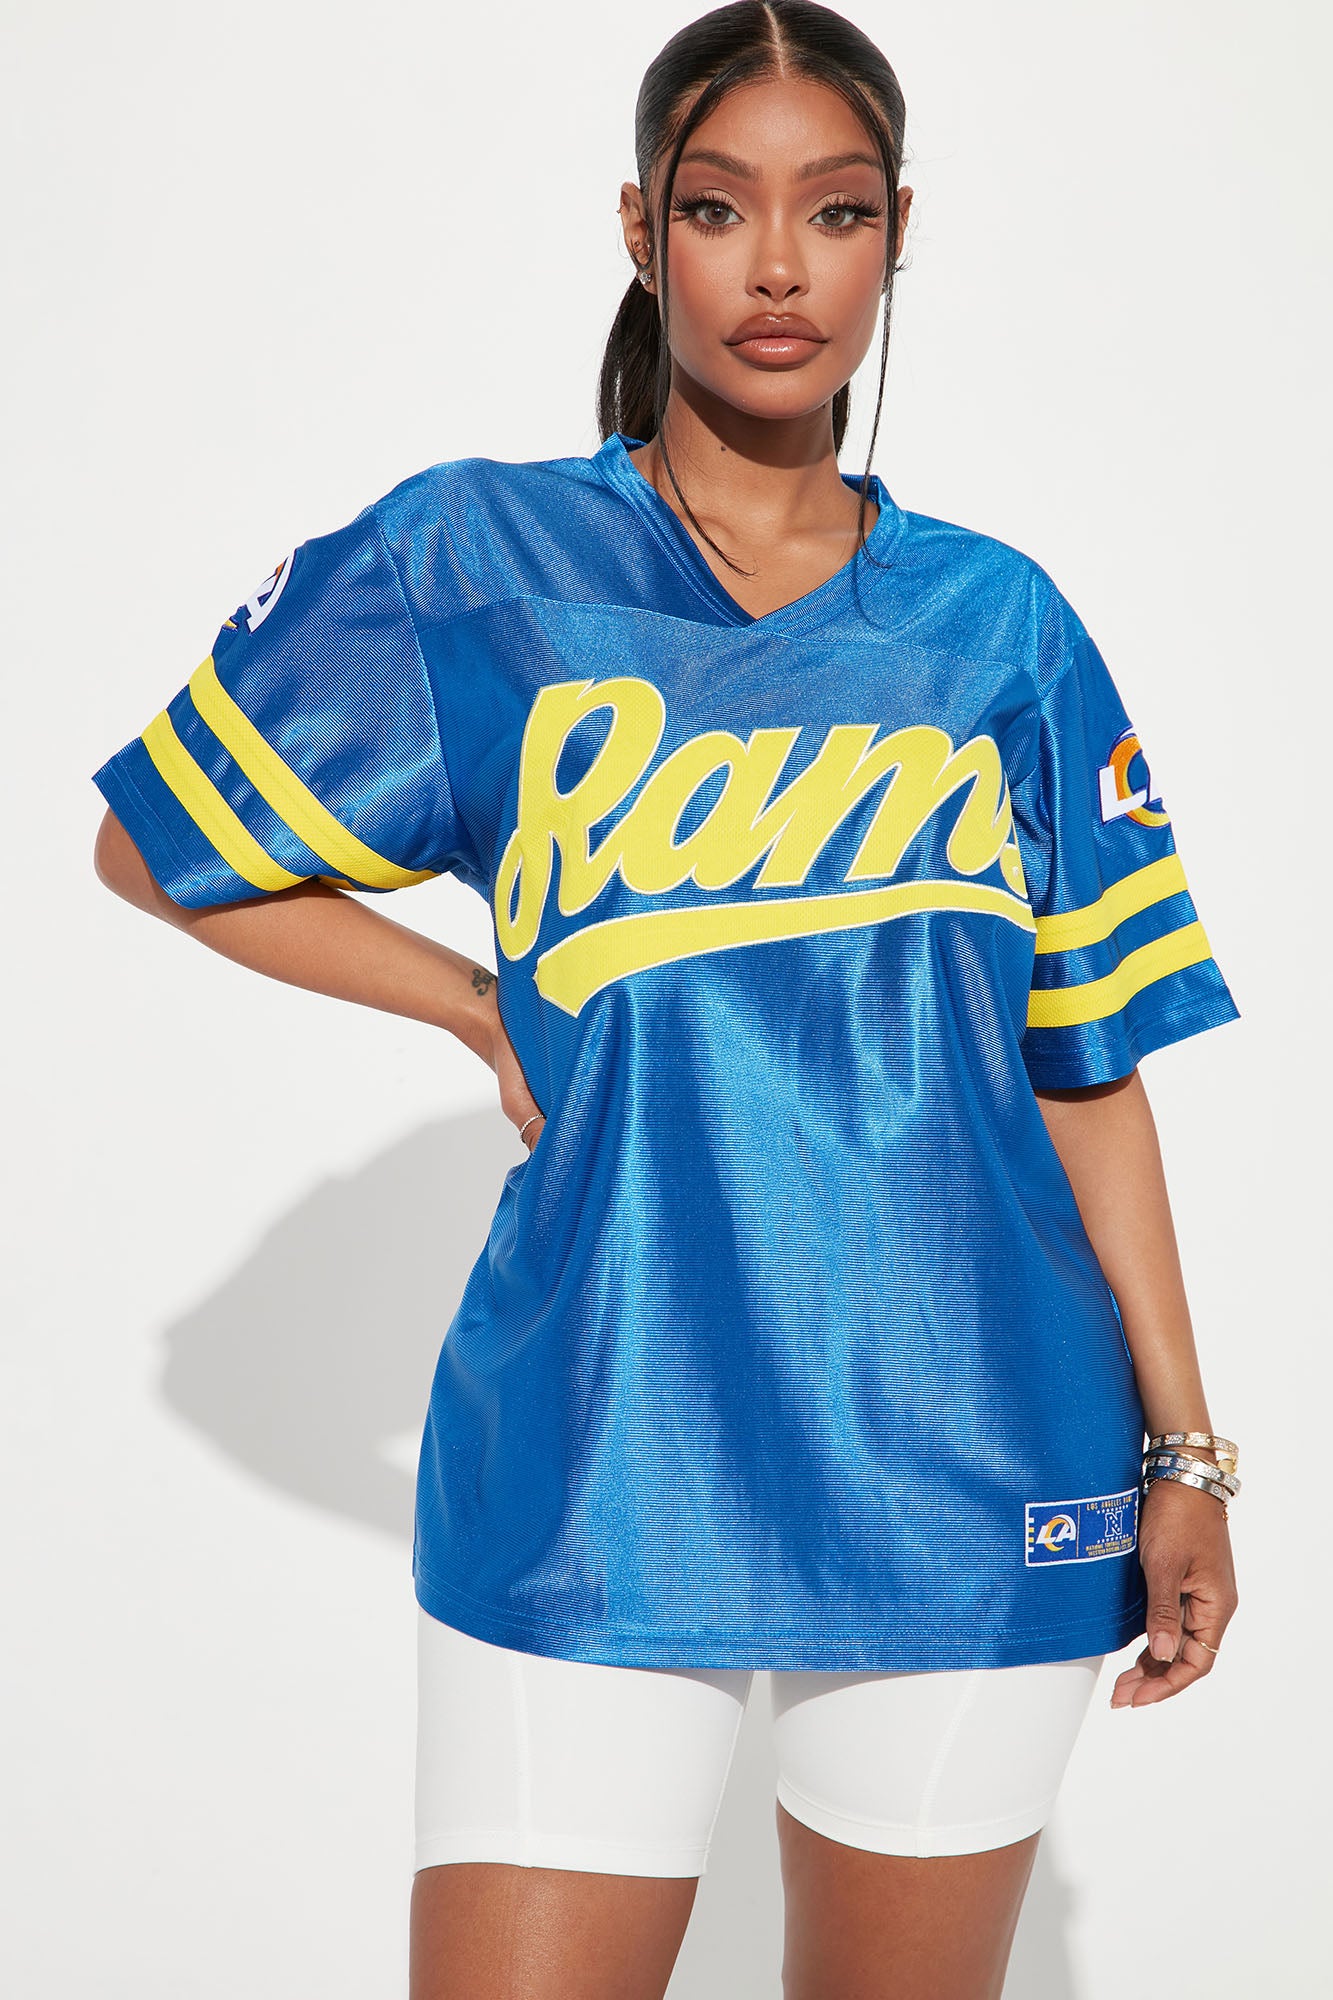 Los Angeles Rams Mesh Top - Blue, Fashion Nova, Screens Tops and Bottoms